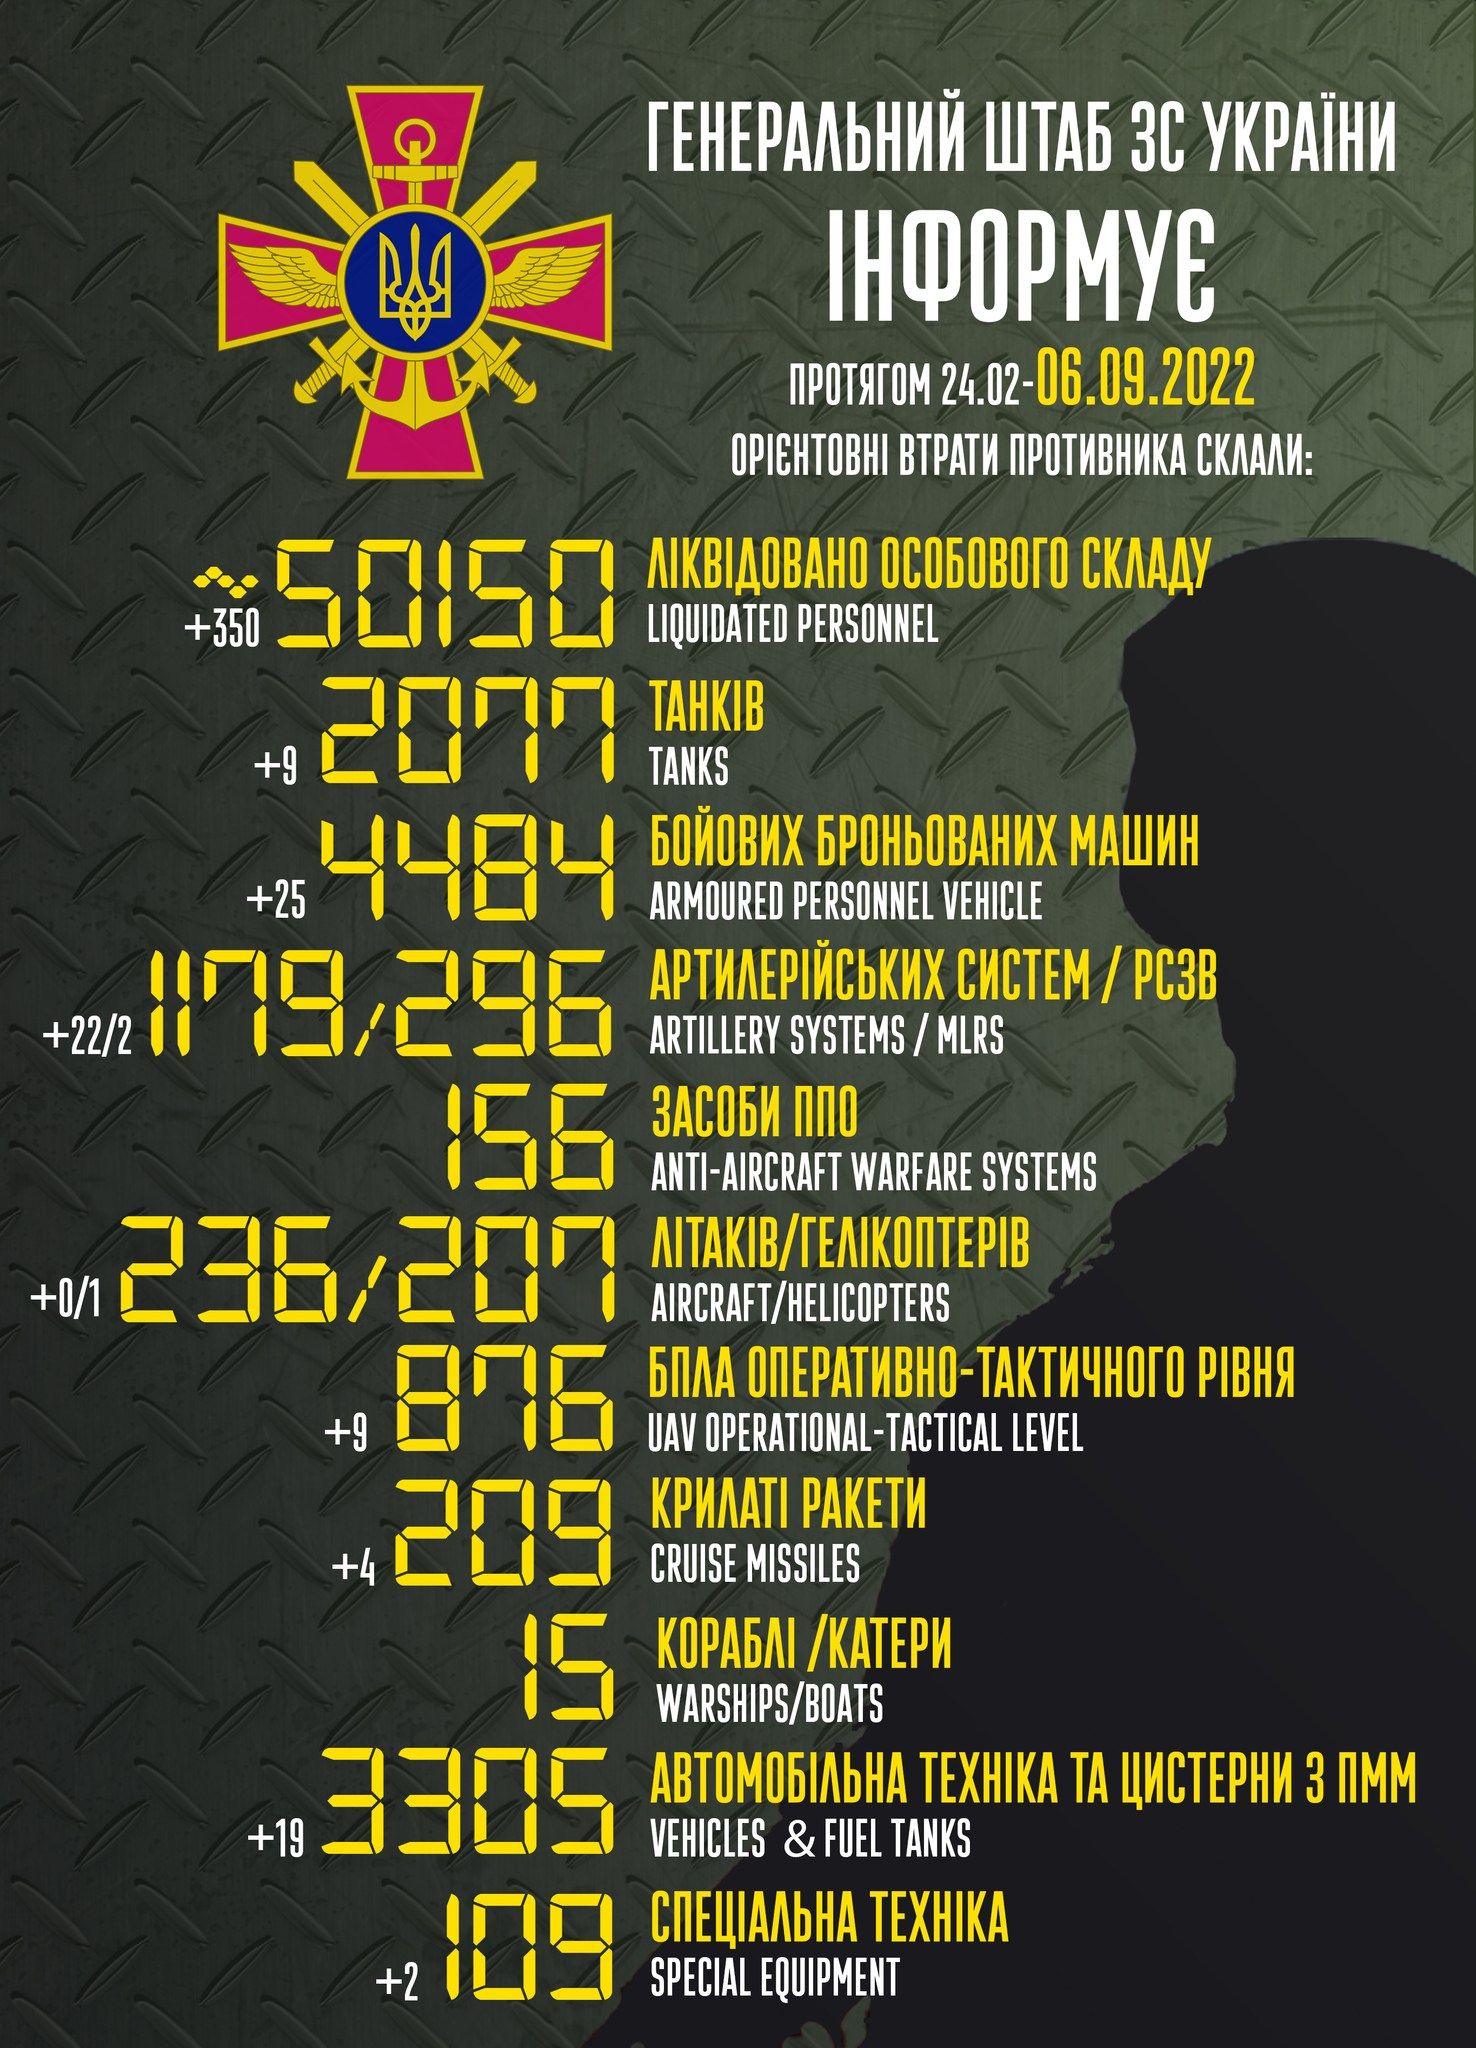 Russia's losses to date exceed 50,000 military personnel | Ukrainska Pravda